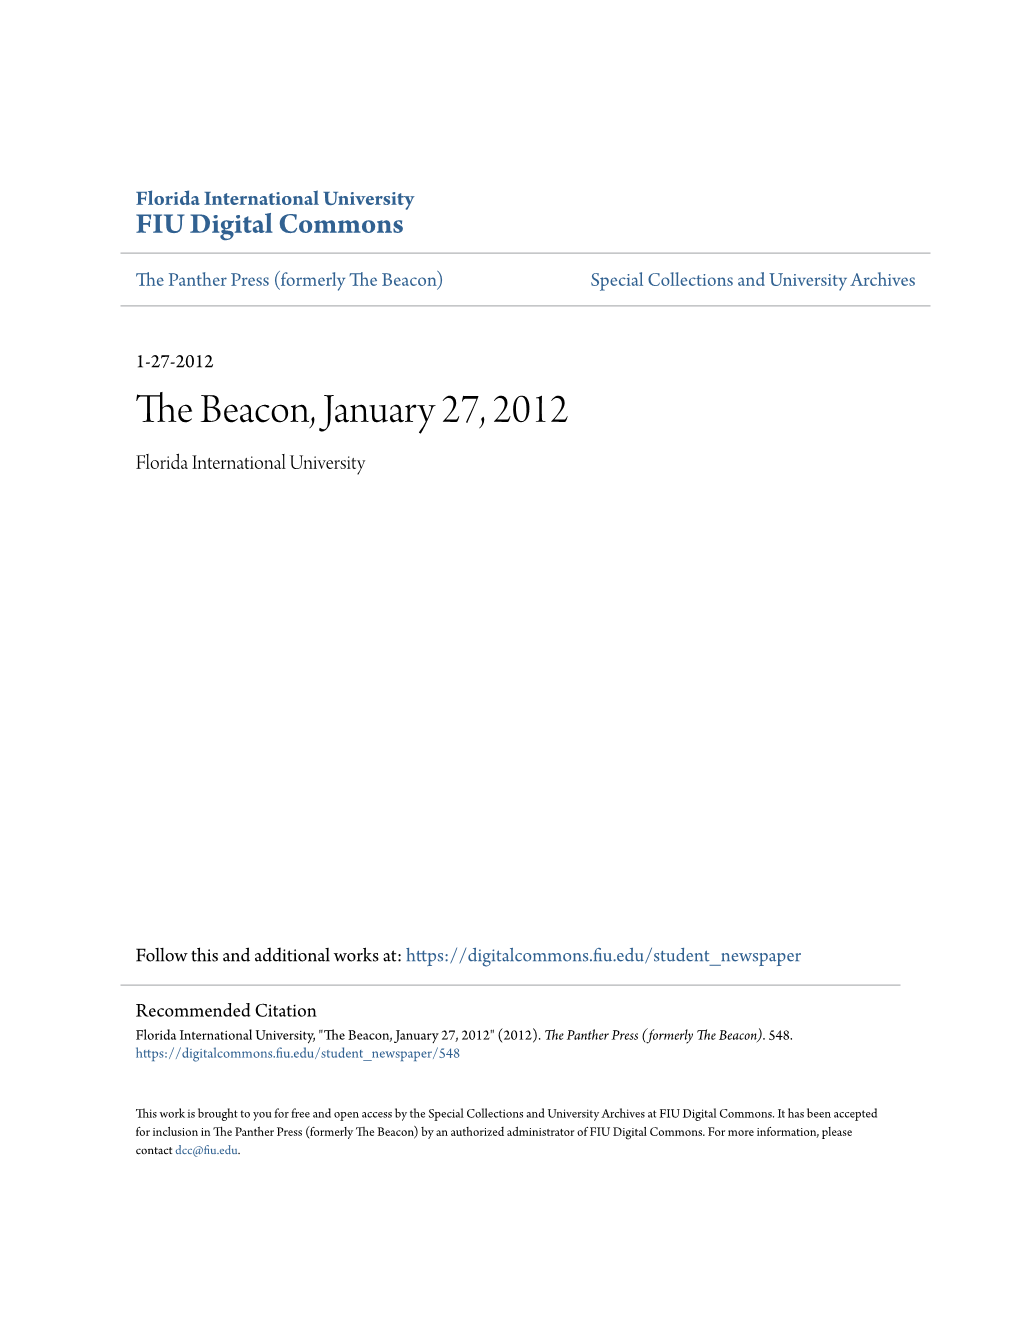 The Beacon, January 27, 2012 Florida International University